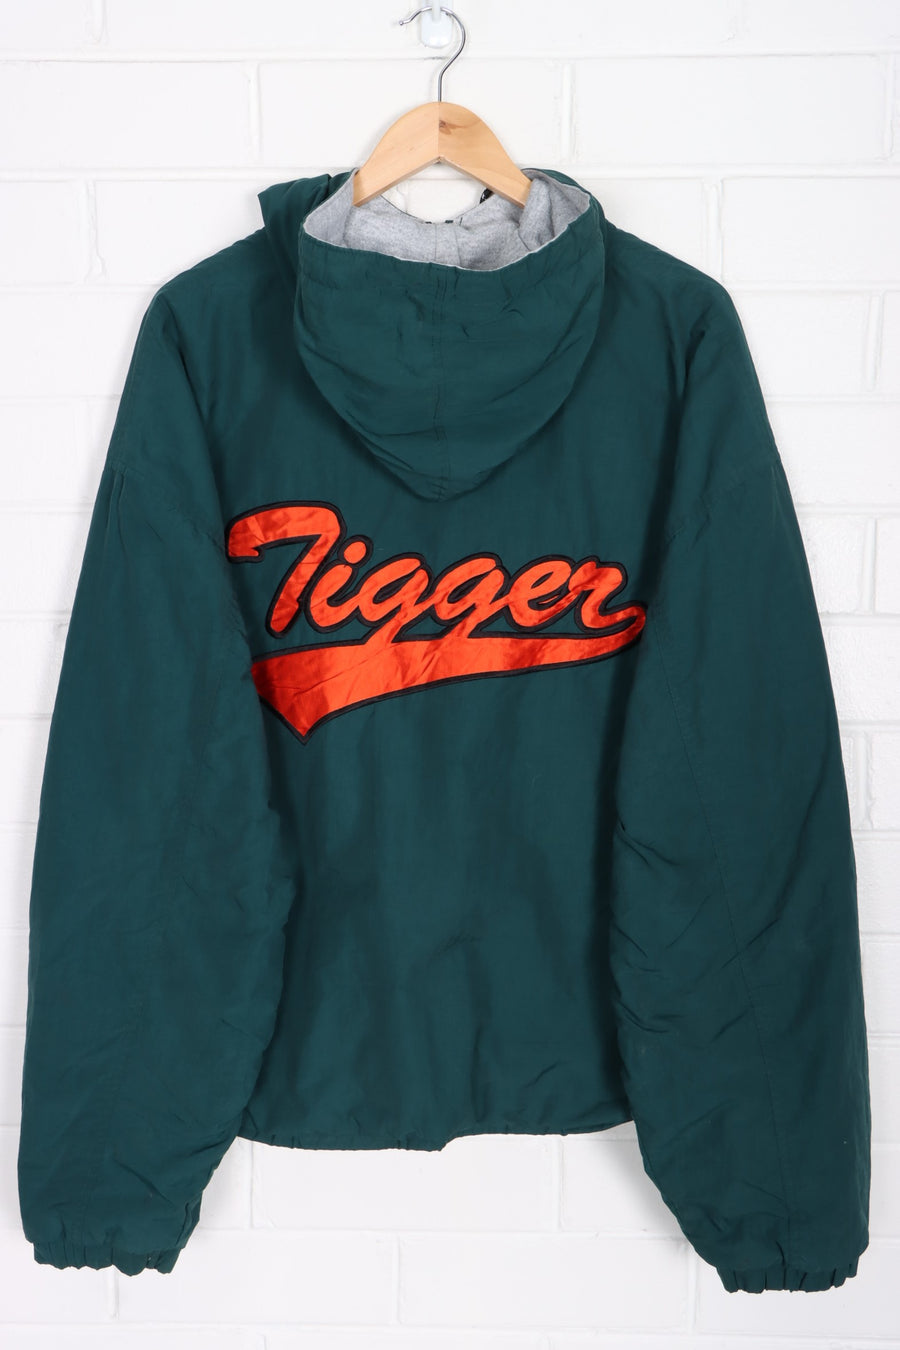 DISNEY Tigger Embroidered Disneyland Lined Windbreaker Jacket (XXL)